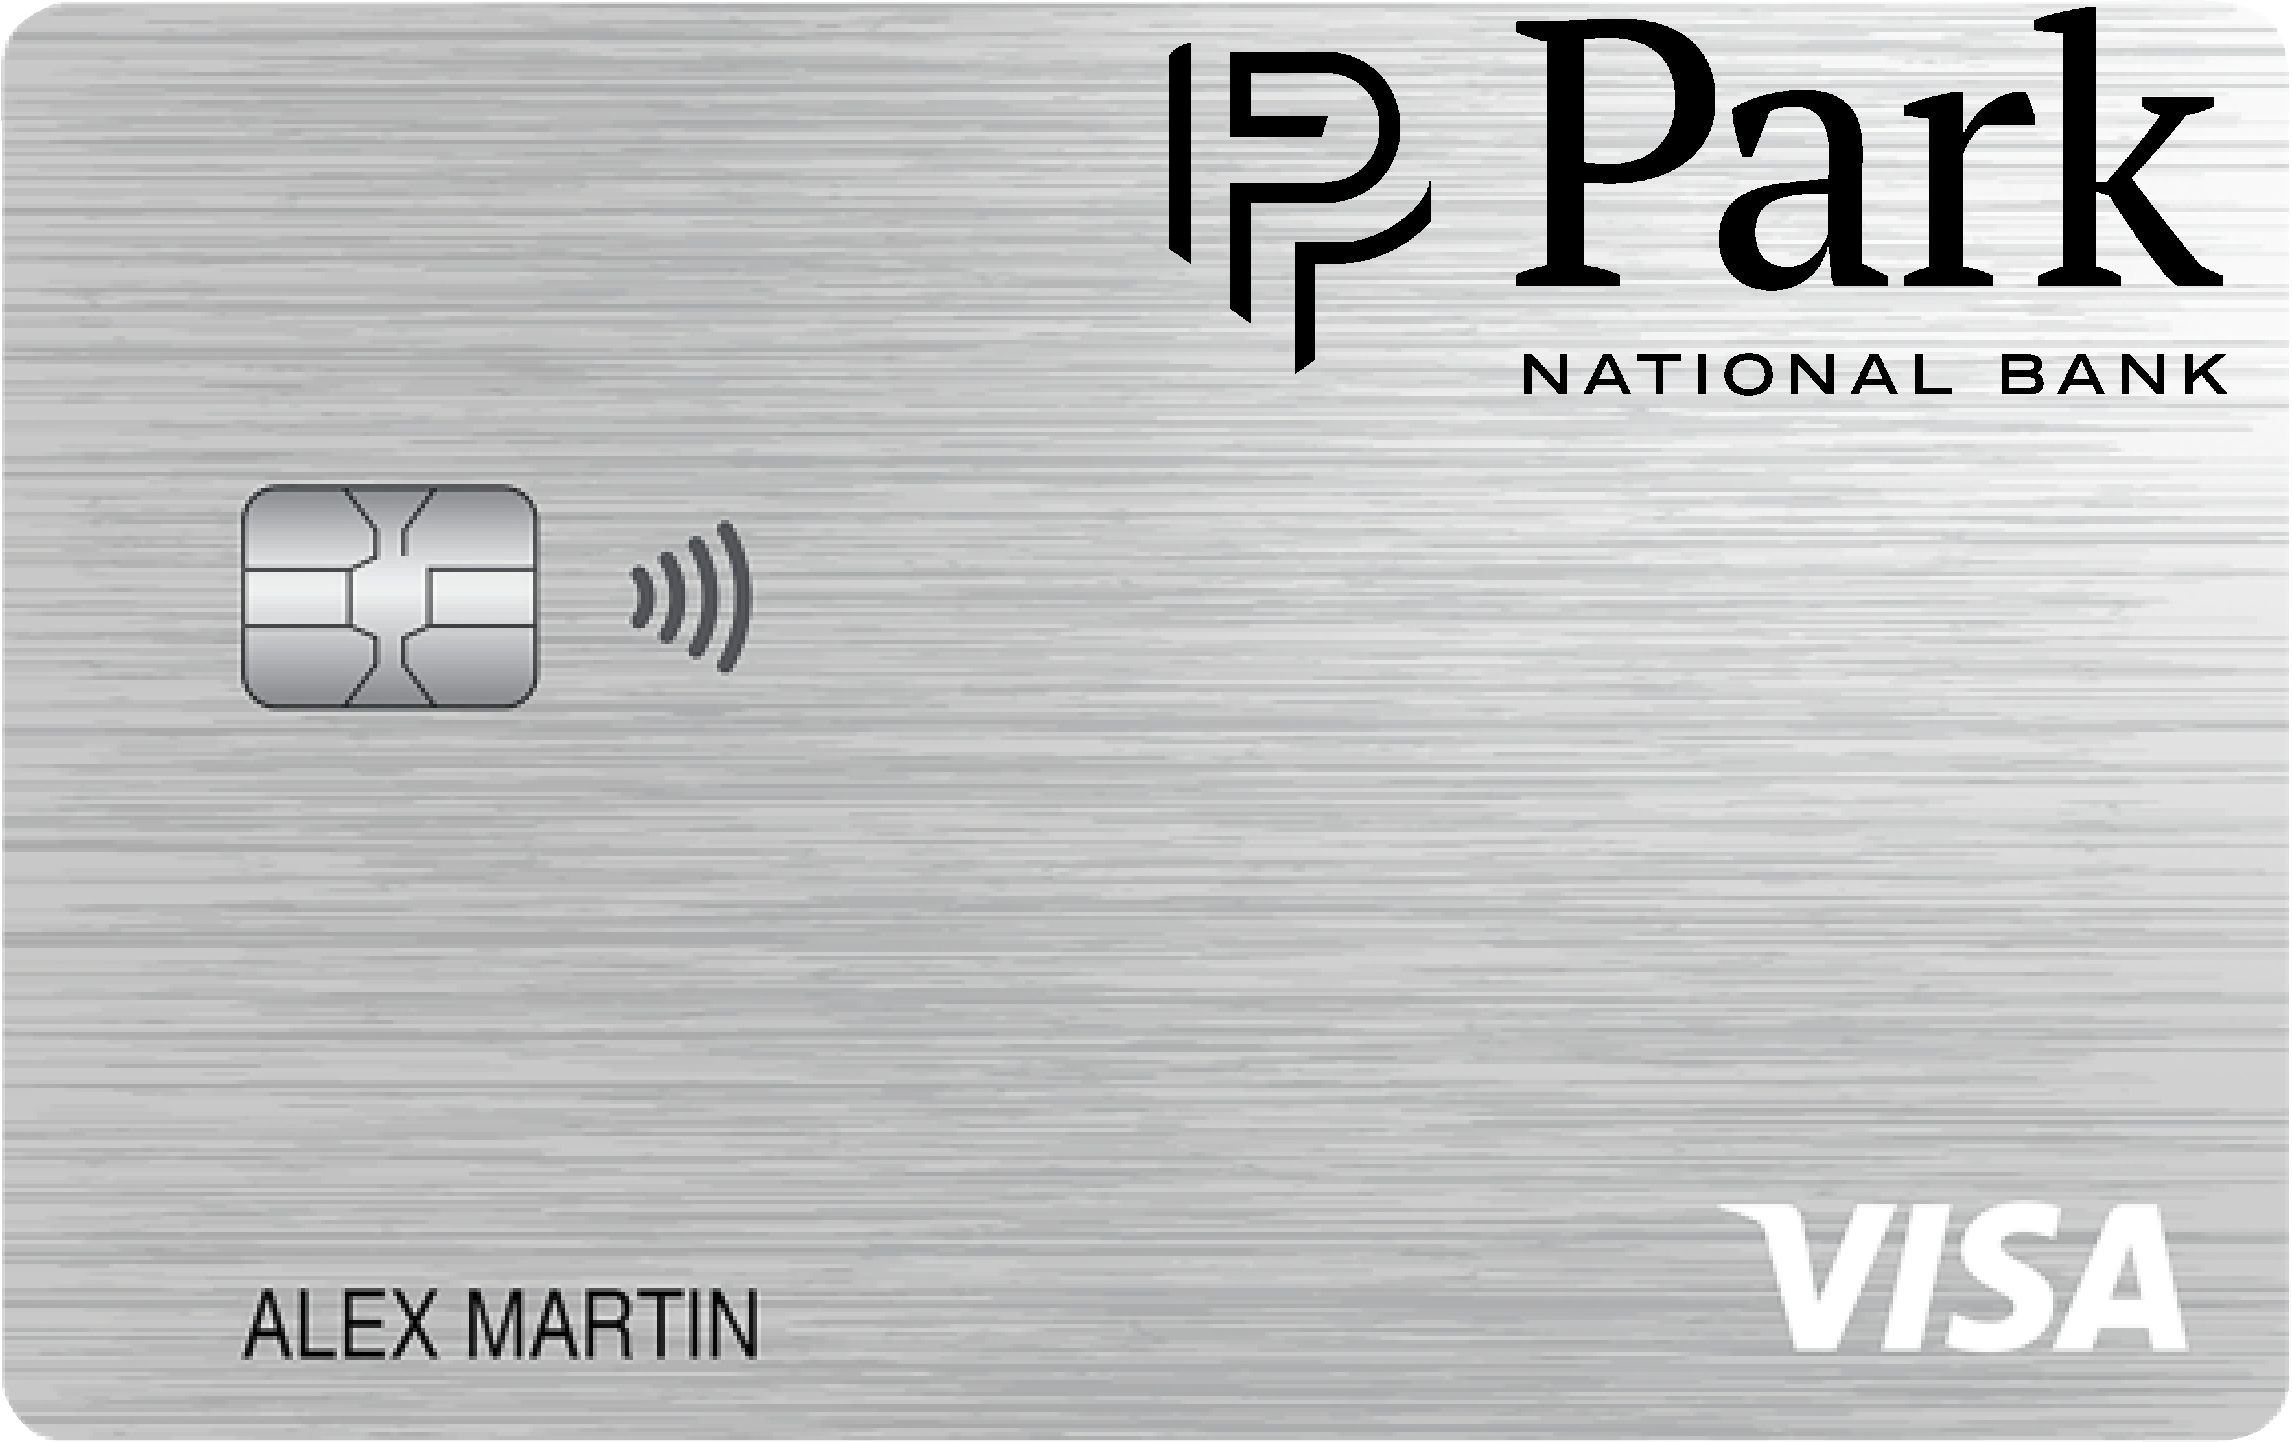 Park National Bank Platinum Card